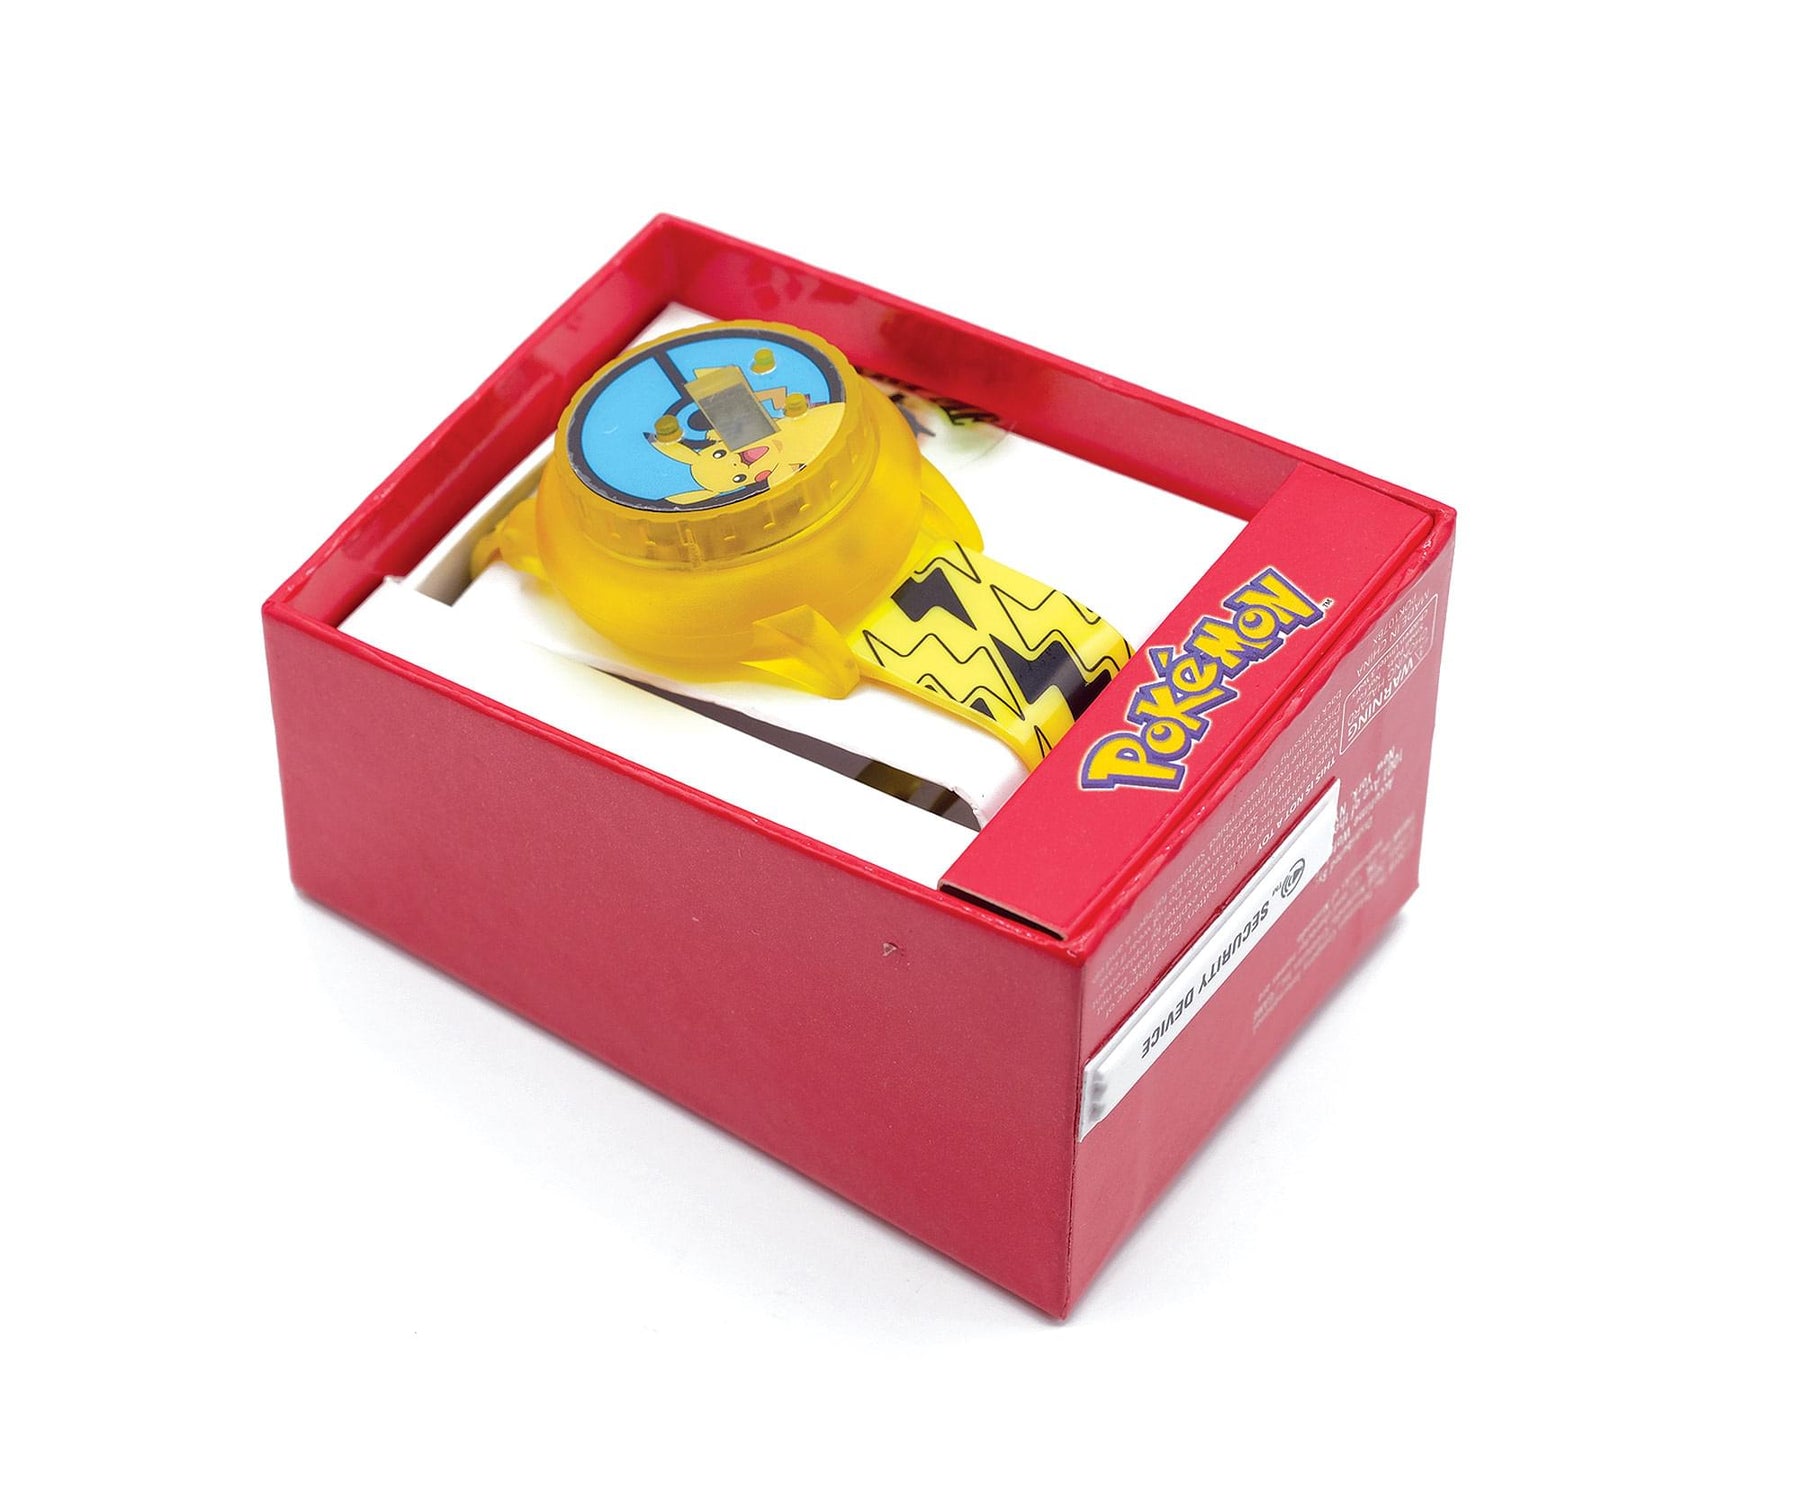 Pokemon Pikachu Lightening Bolt LCD Watch with Spinning Lights